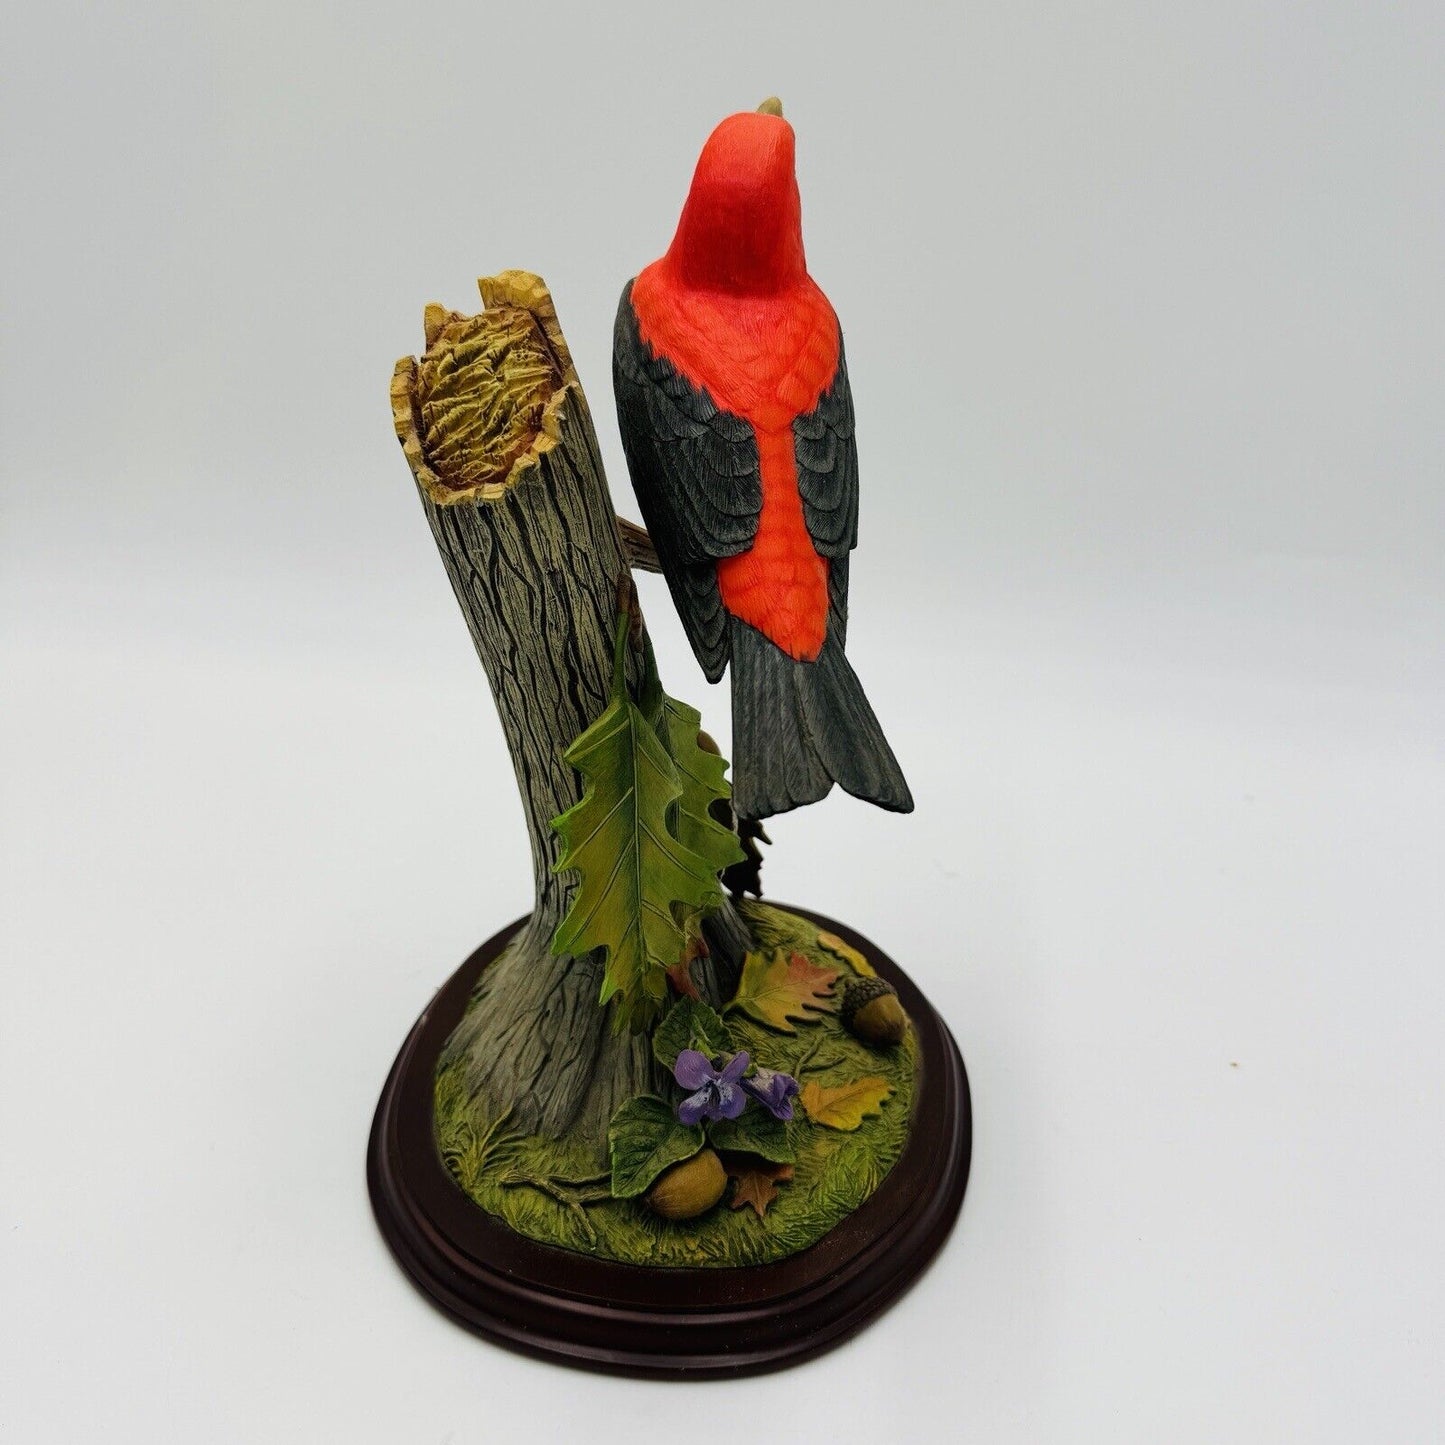 The Danbury mint Wodland brilliance  Jeff Rechin scarlet Tanager bird Figurine